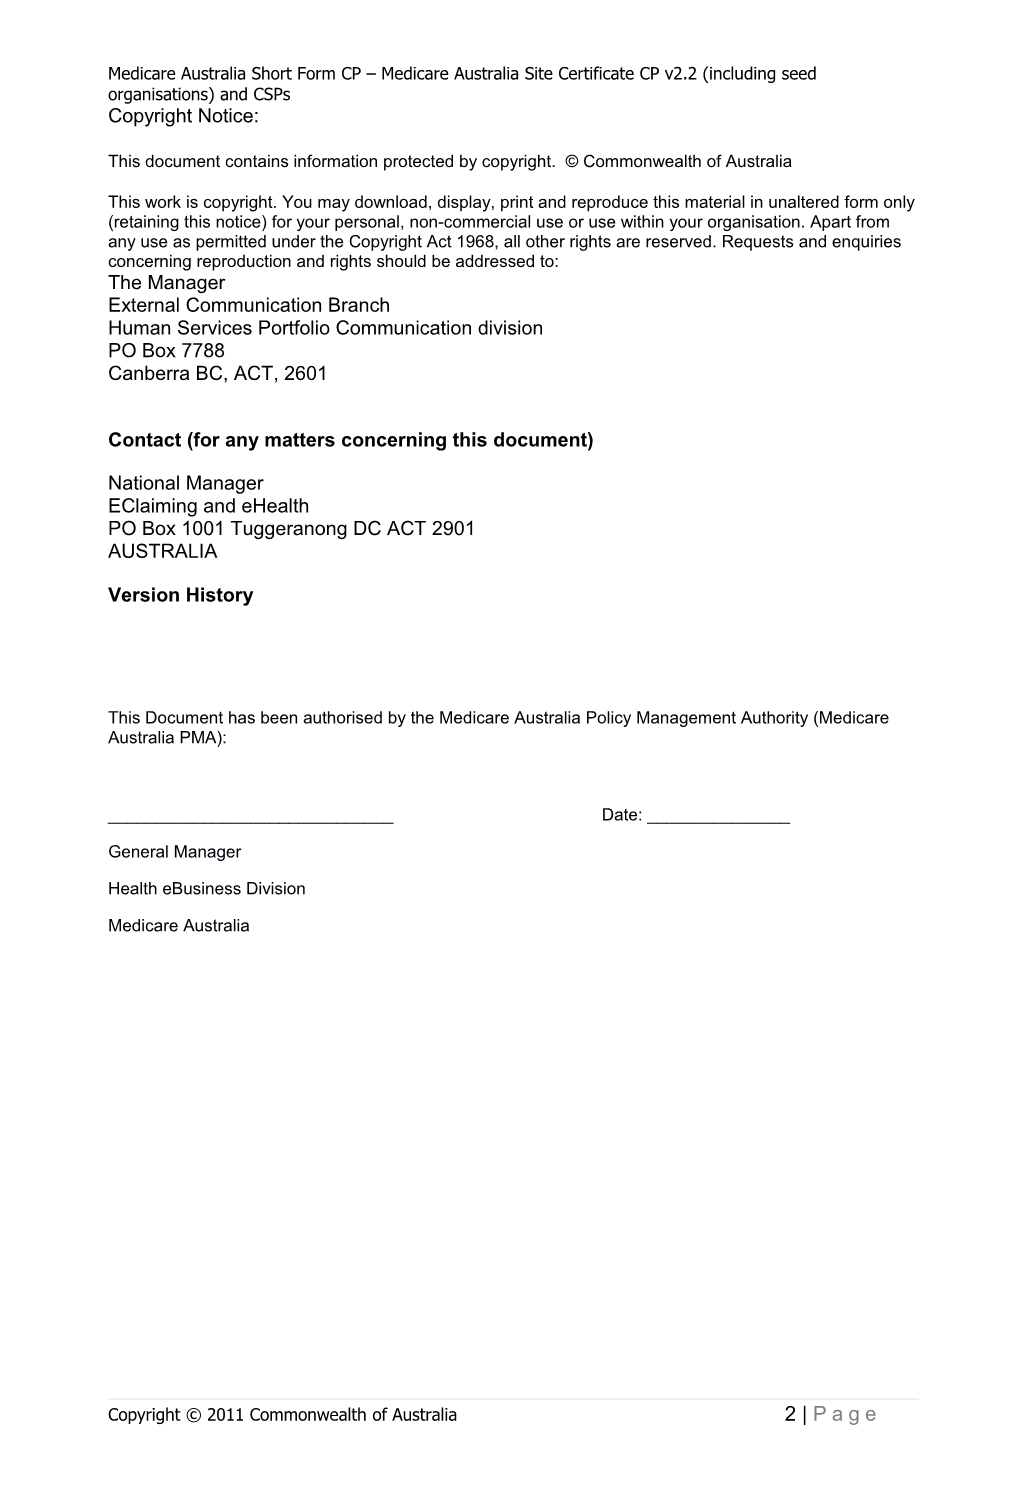 Short Form Certificate Policy - Medicare Australia Site Certificates Communities of Interest